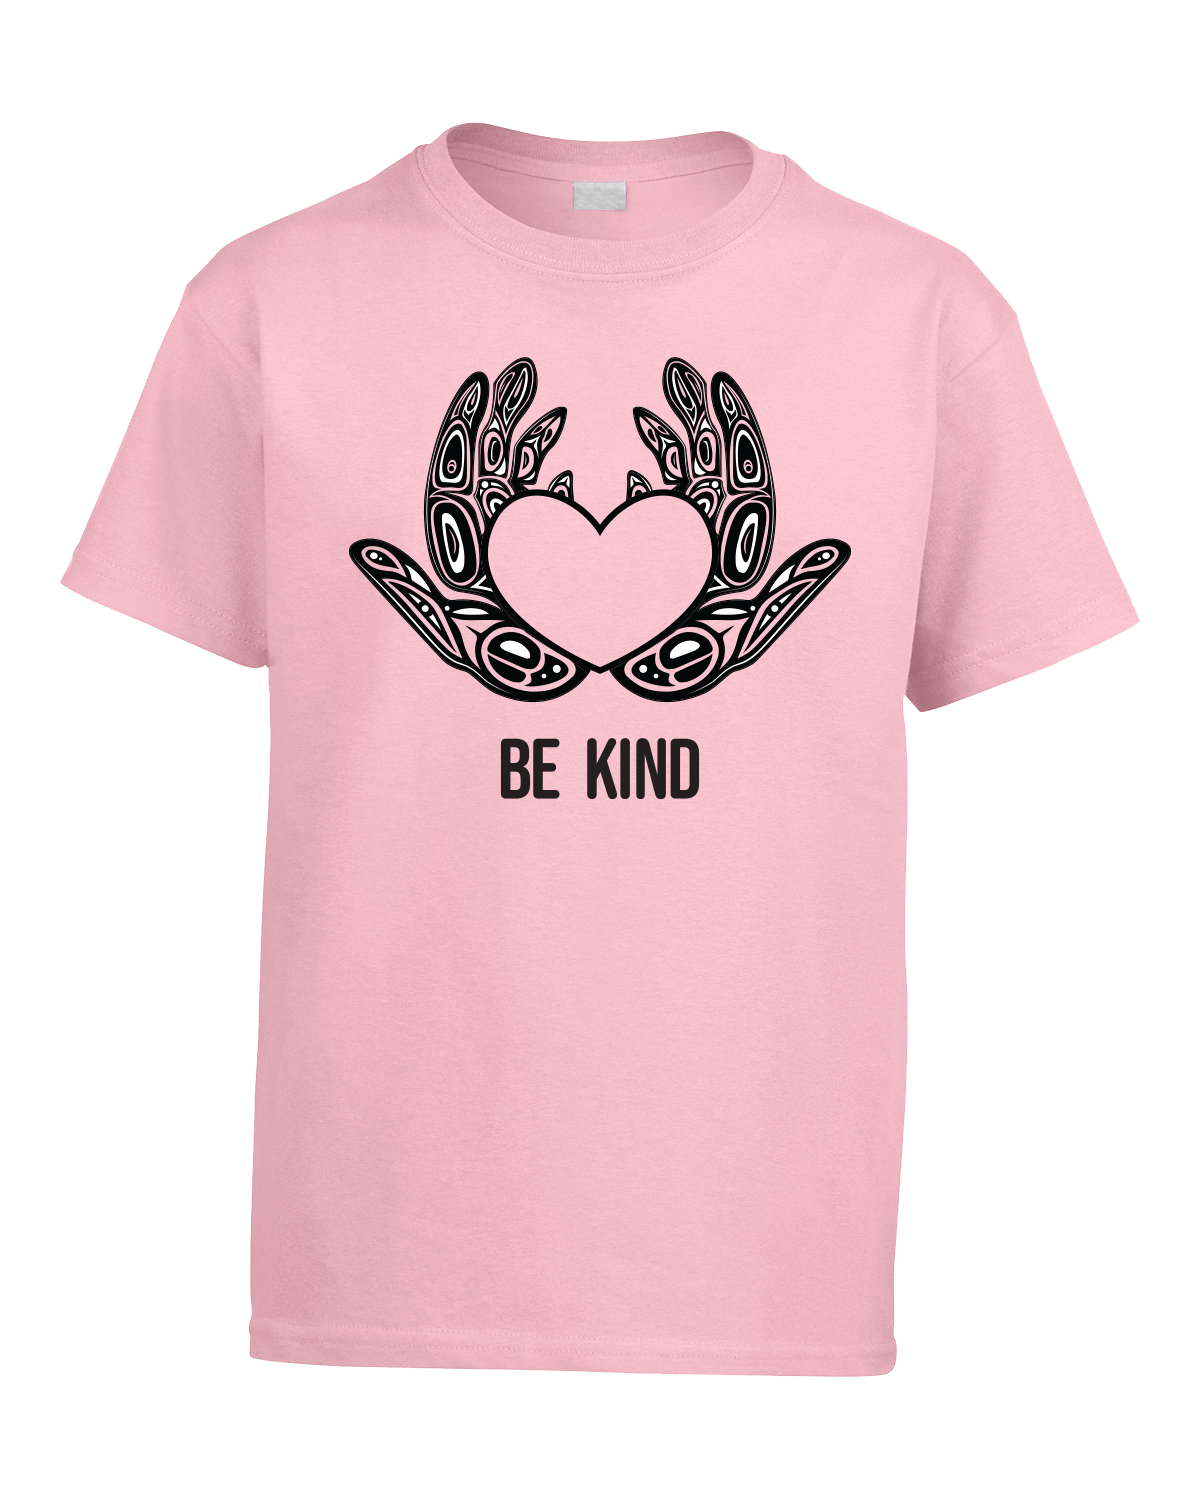 Uplift - Adult Pink T-Shirt